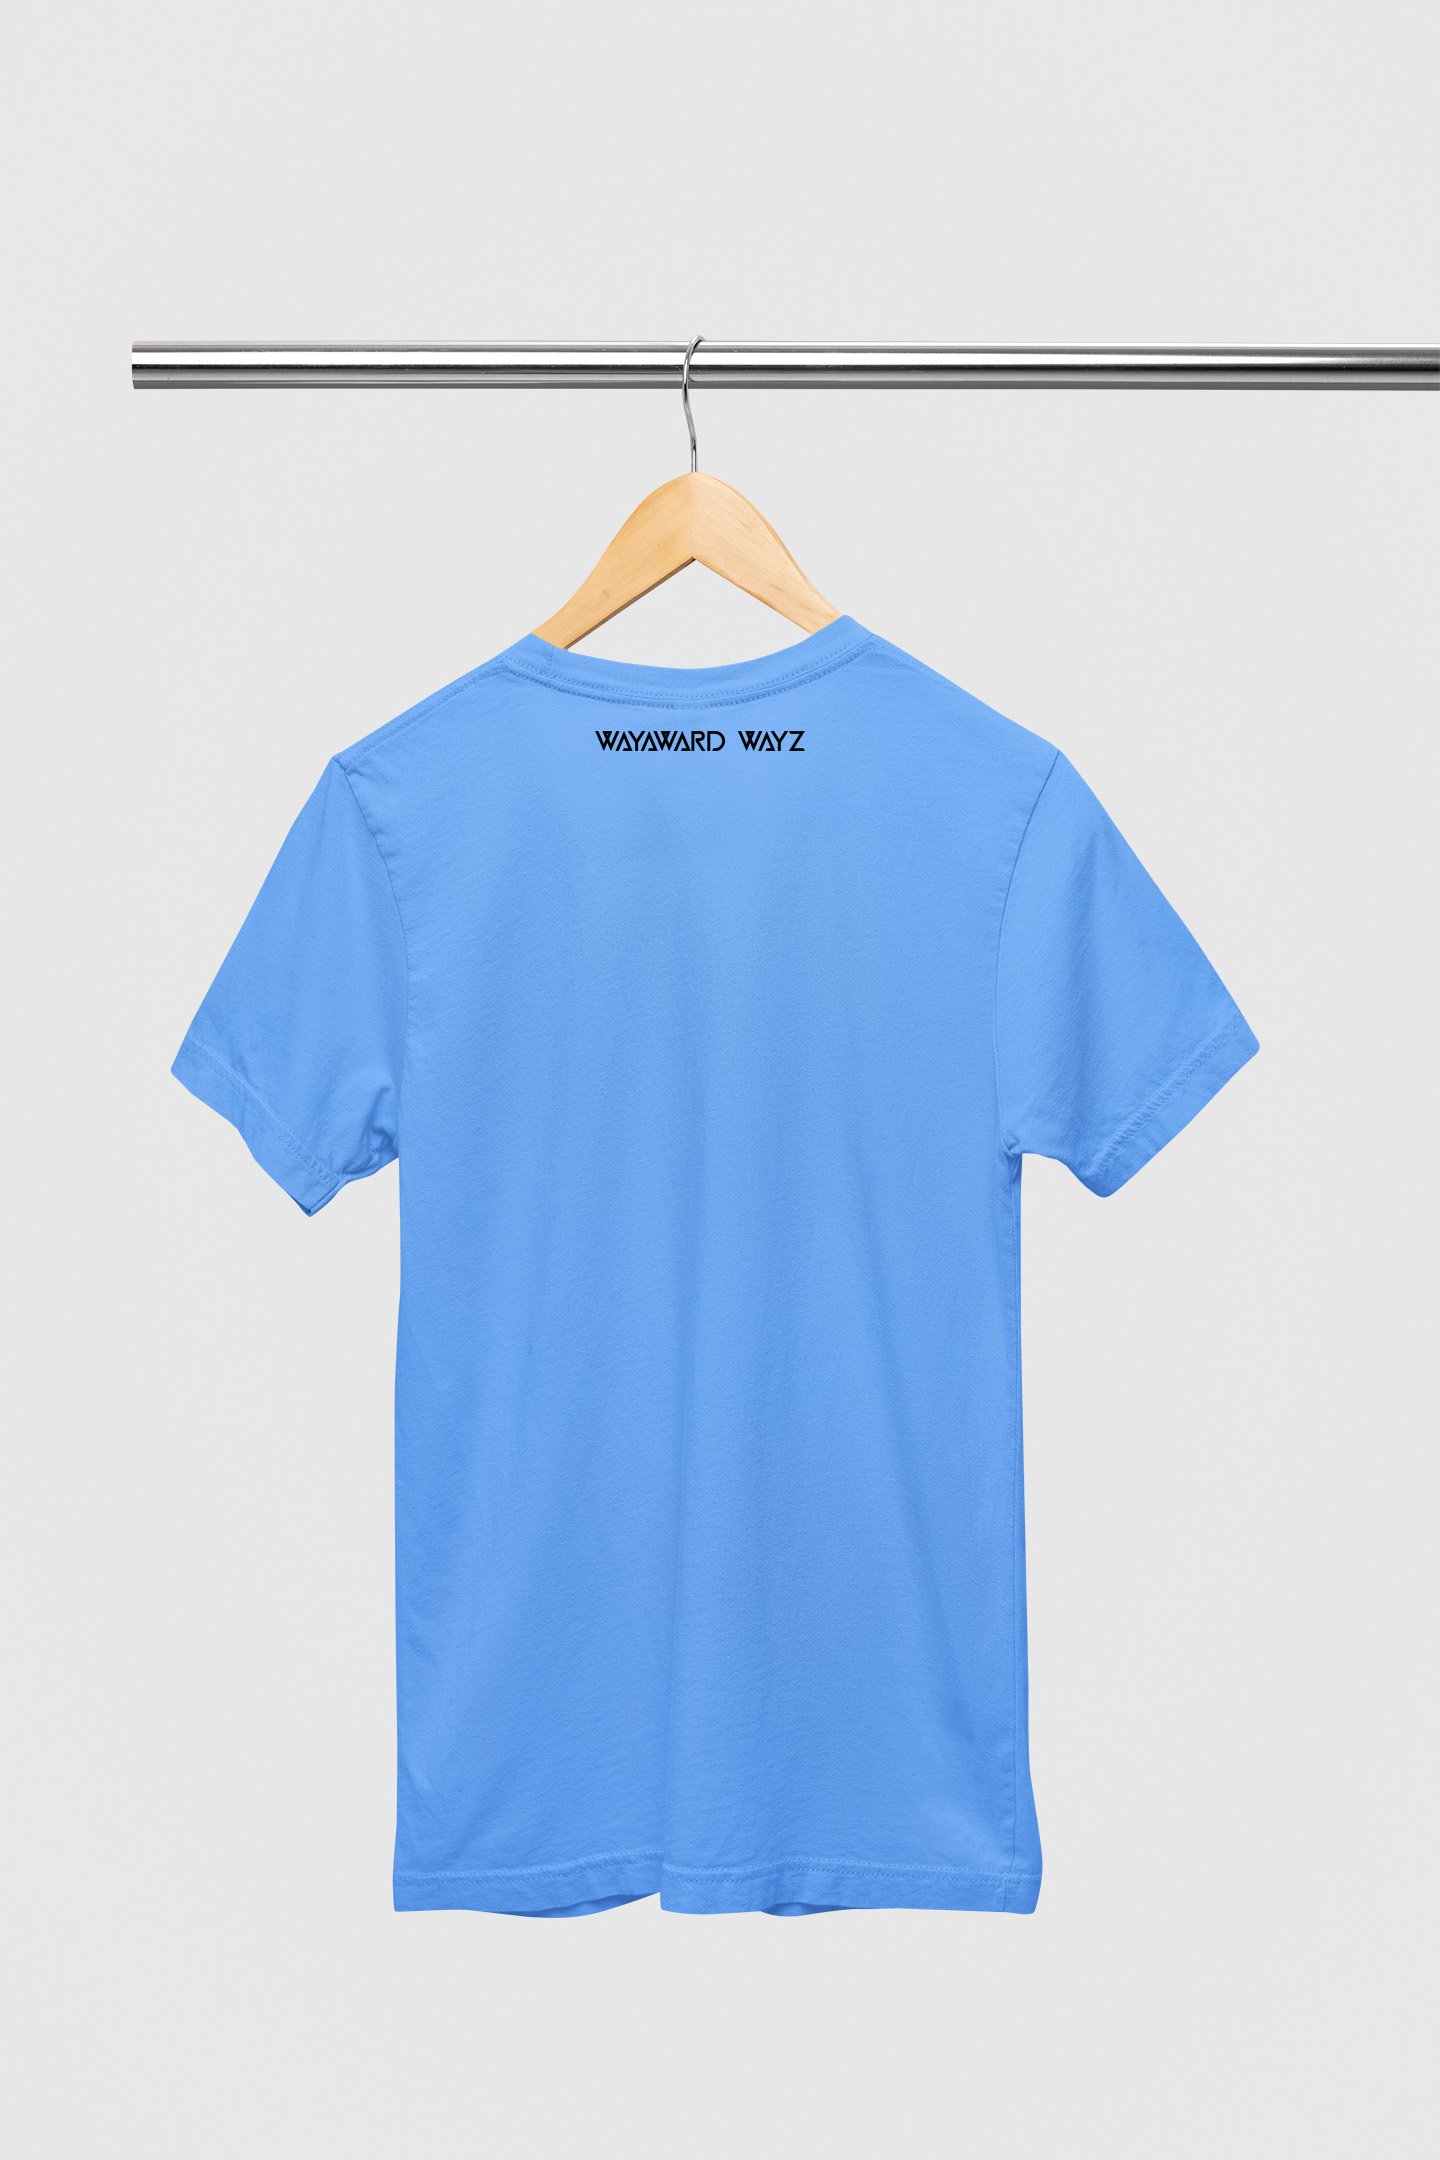 Wayward Wayz Solid T-Shirt Sky Blue-hanger back